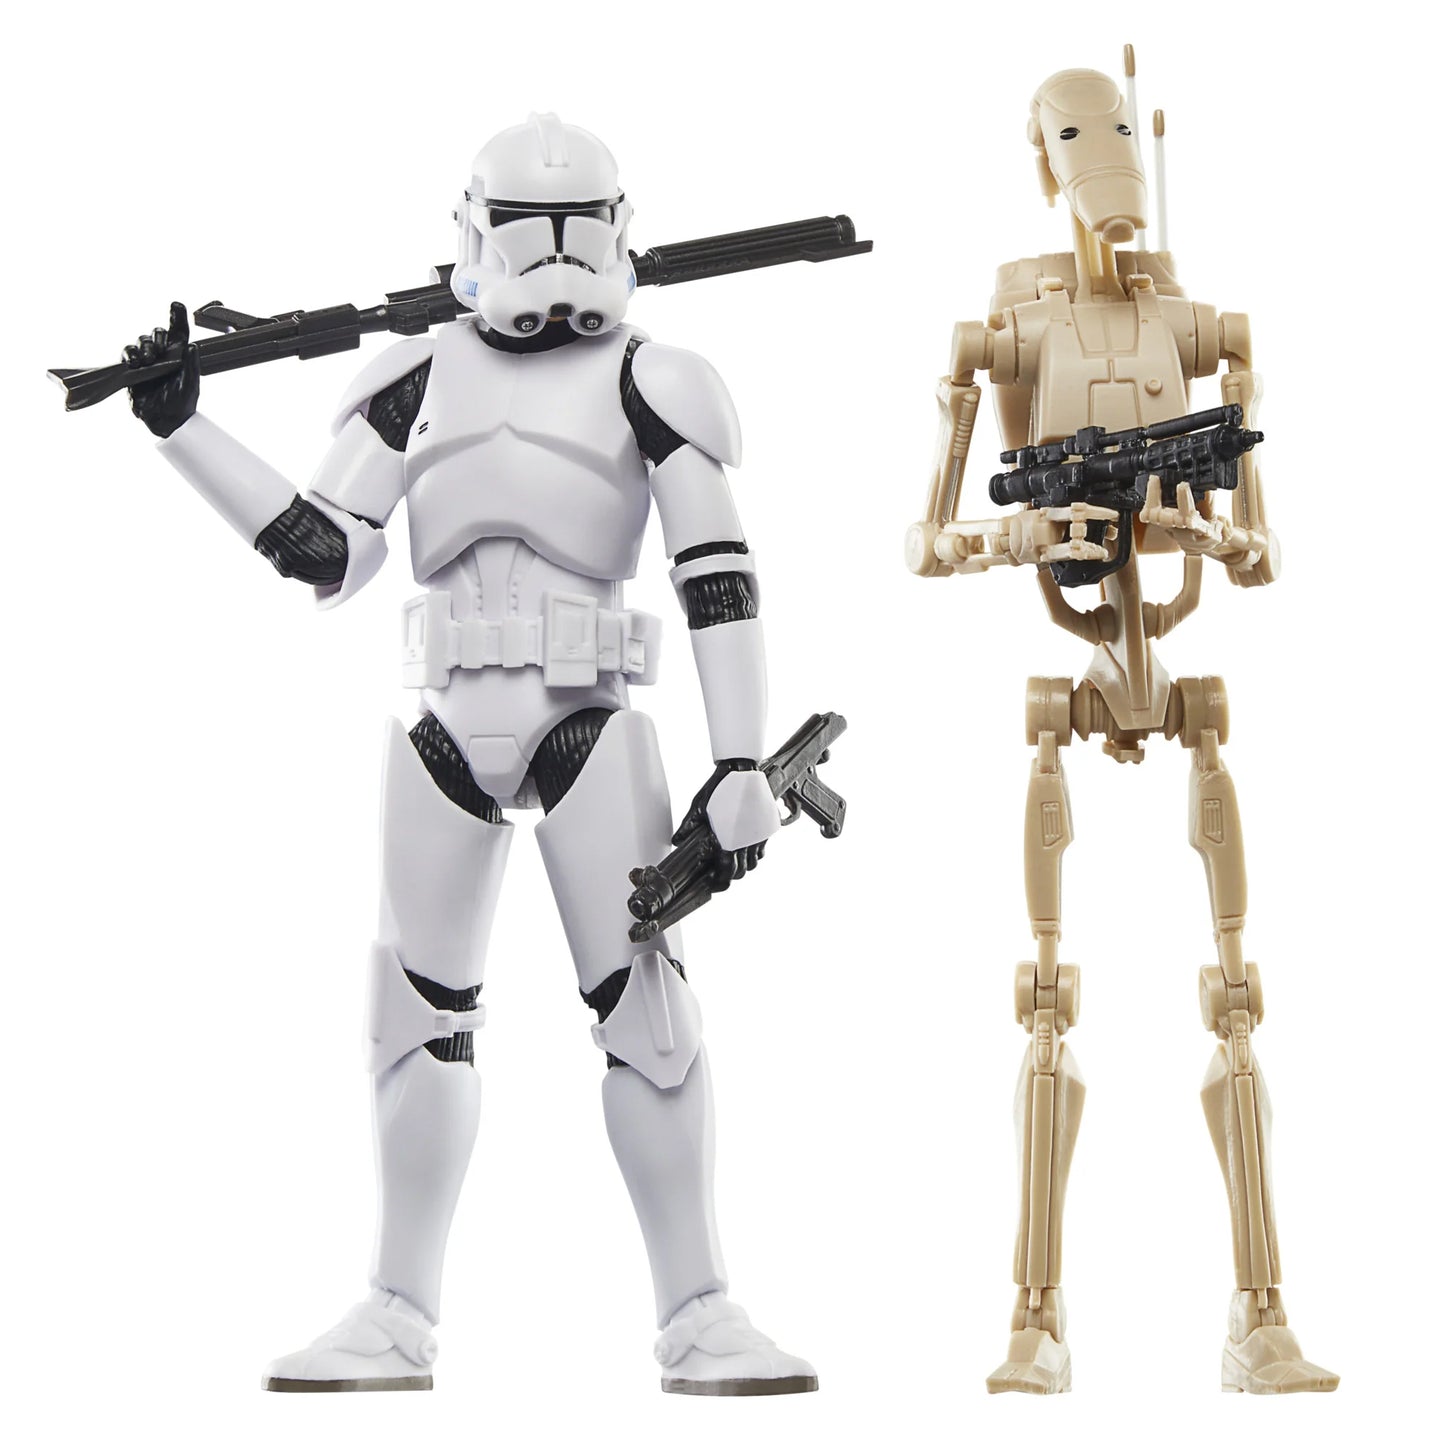 Star Wars The Black Series Phase II Clone Trooper & Battle Droid 2 Pack